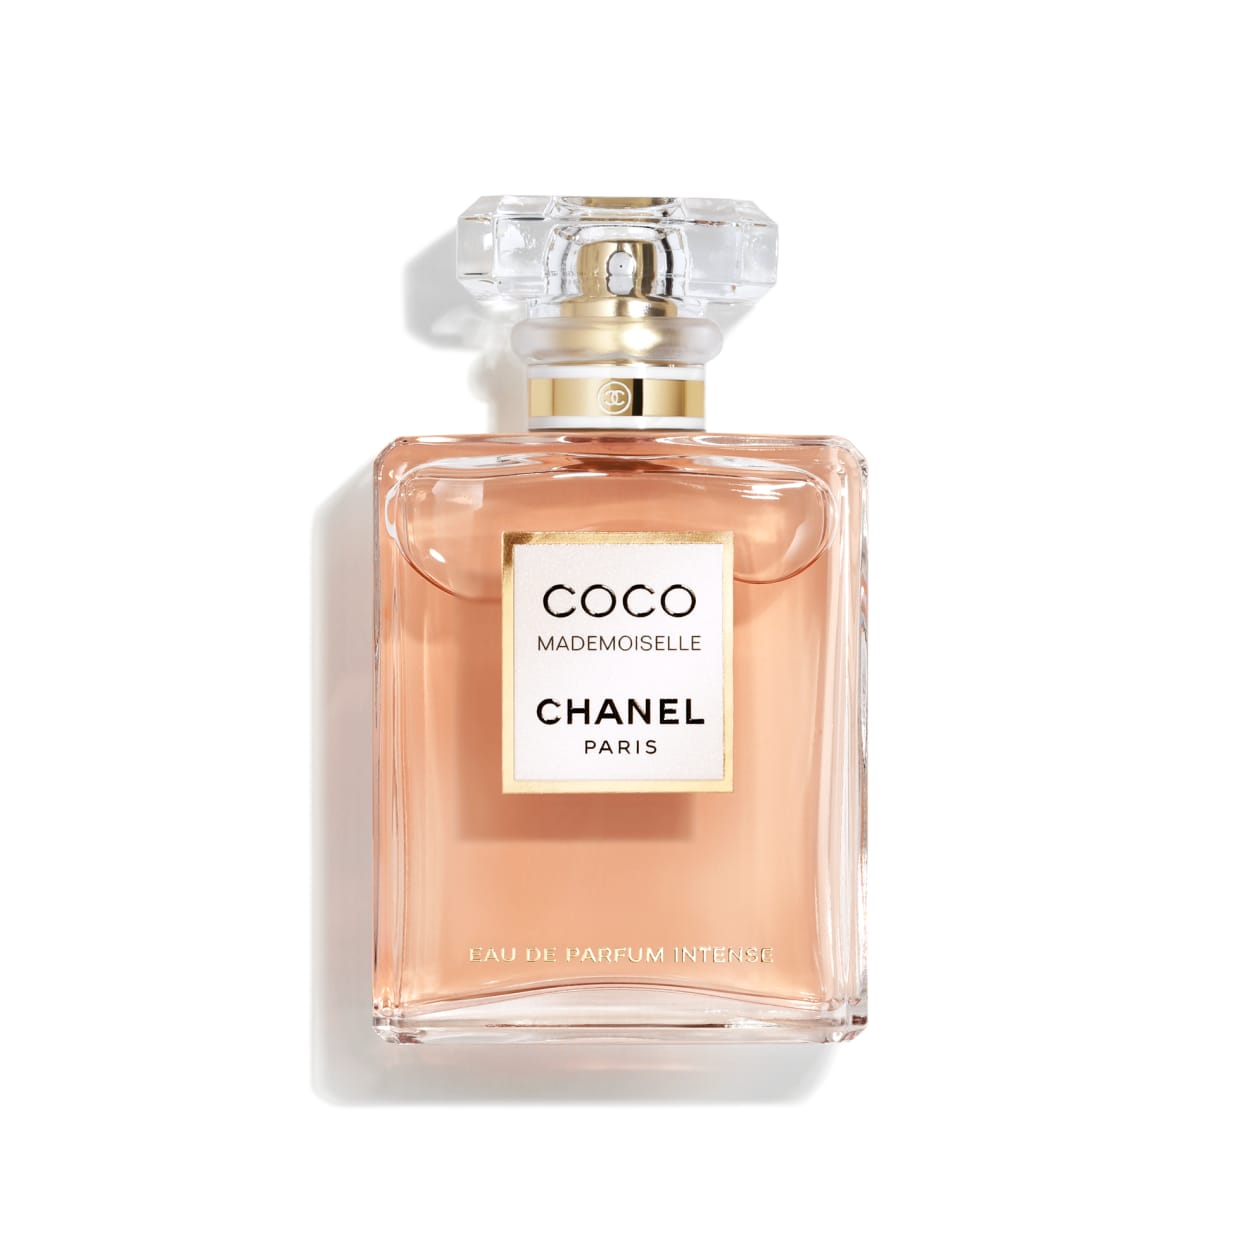 CHANEL COCO MADEMOISELLE |Eau de Parfum Intense Spray